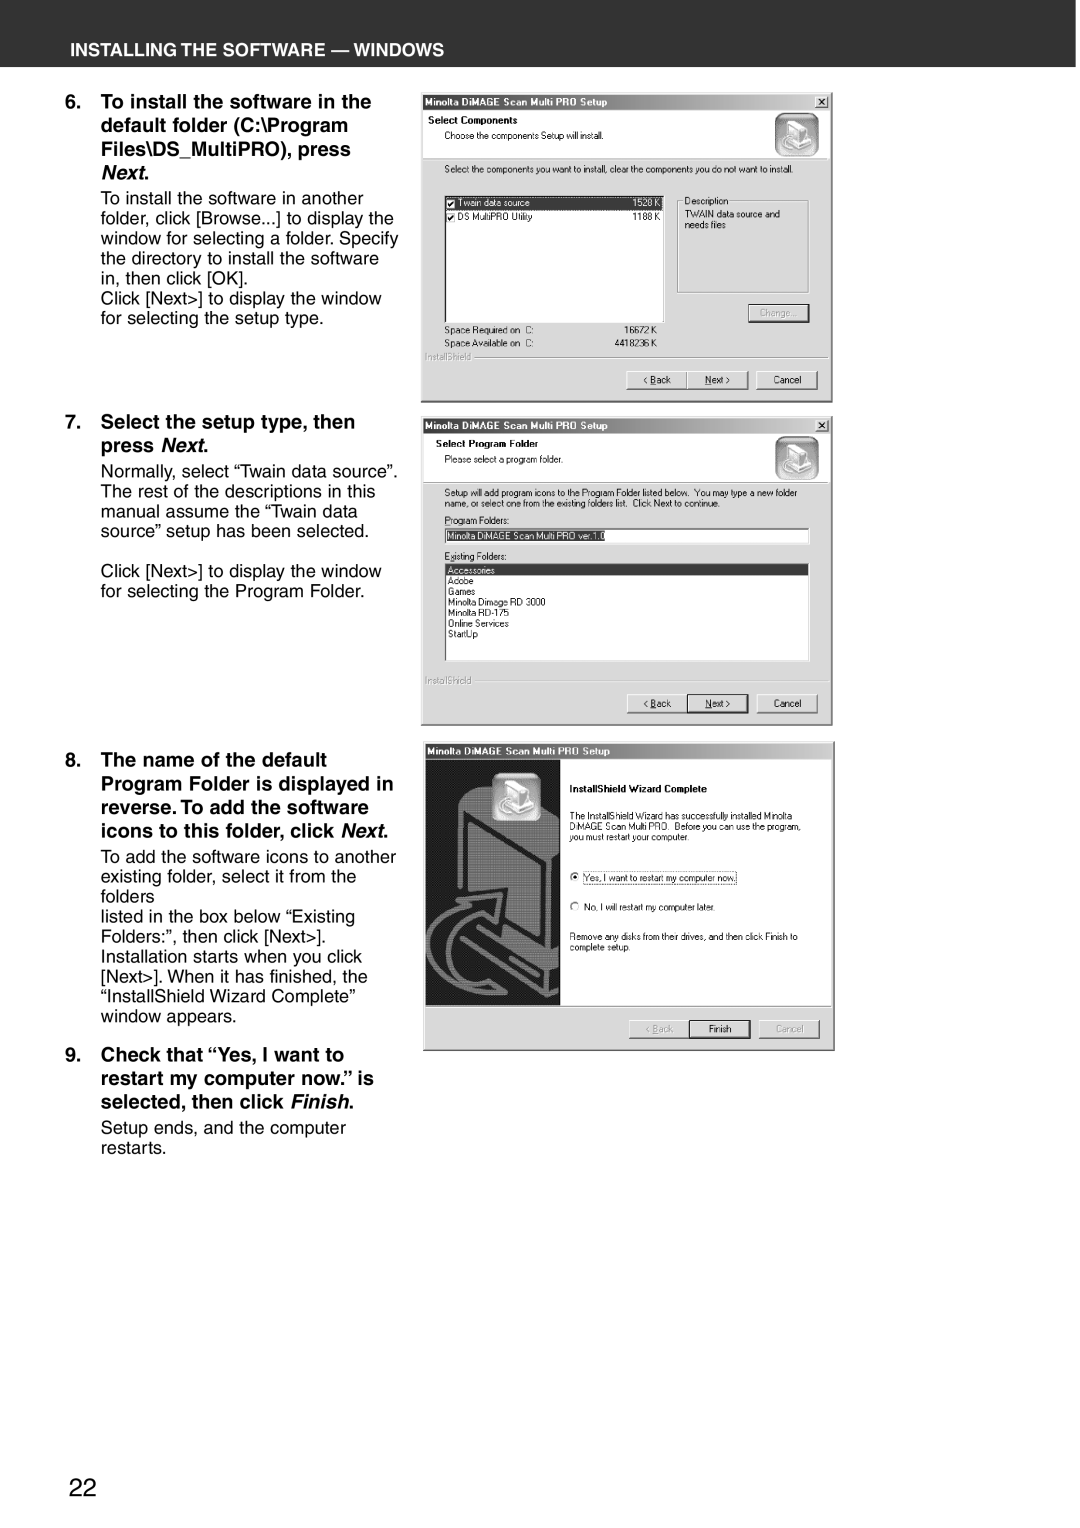 Konica Minolta Scan Multi PRO instruction manual Select the setup type, then press Next 